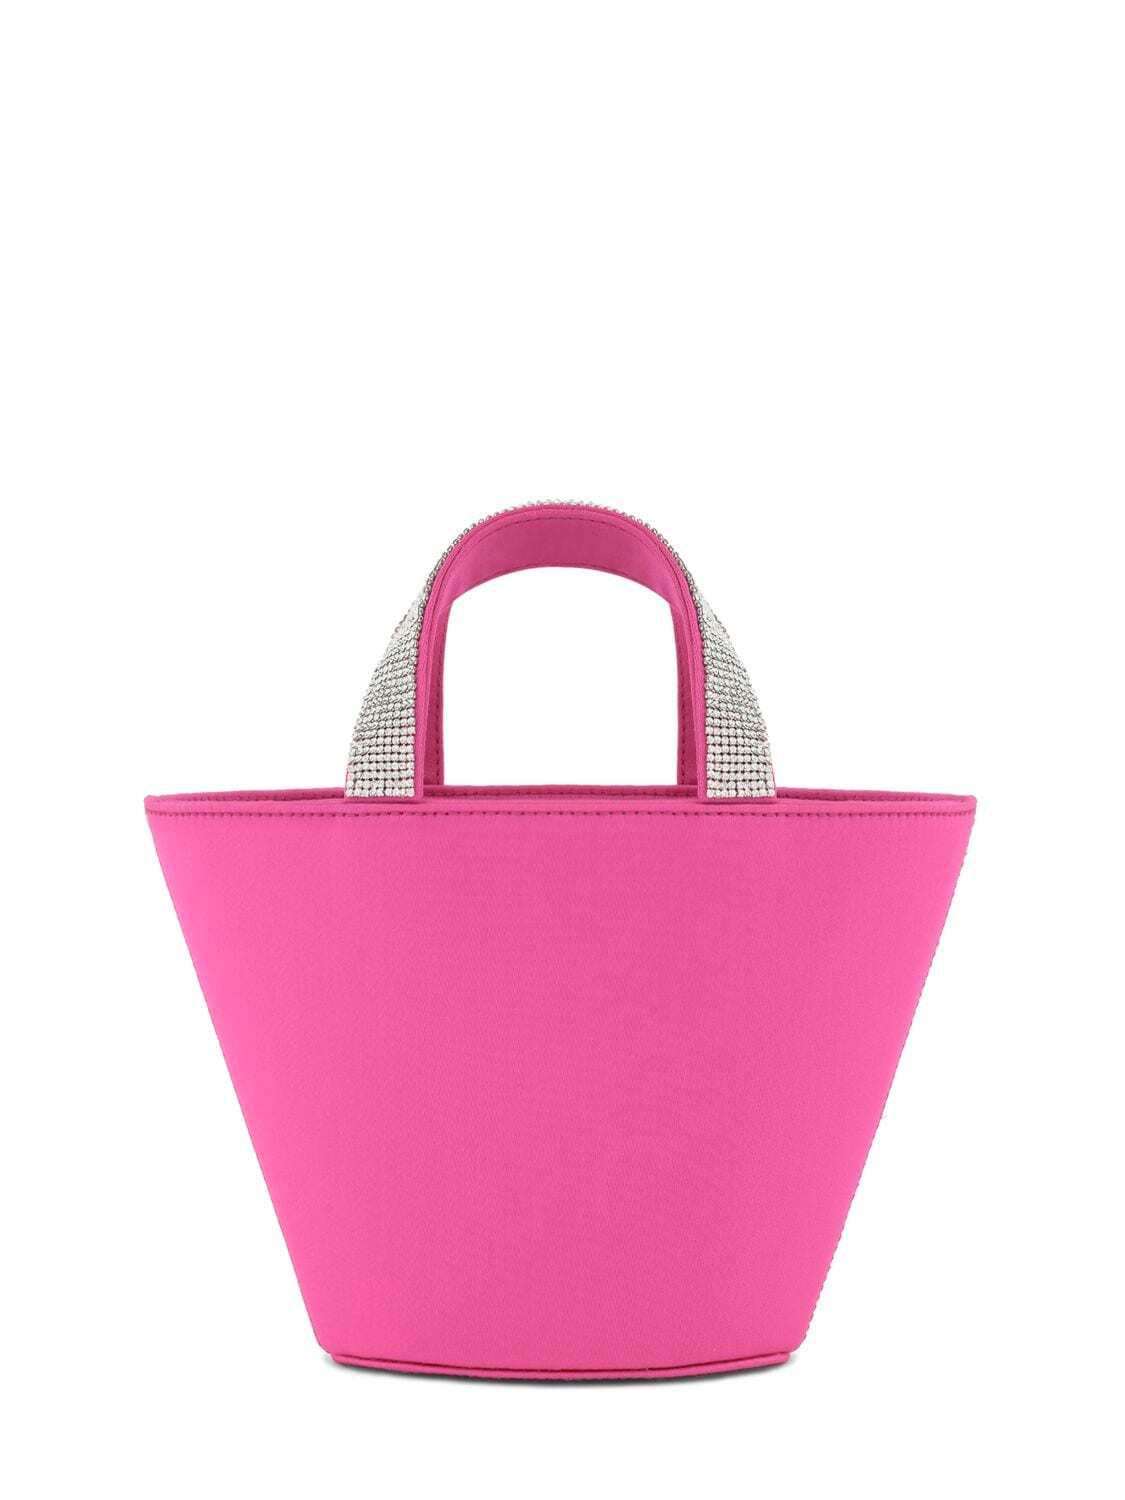 AMINA MUADDI Rih Satin Bucket Bag W/ Crystals in pink